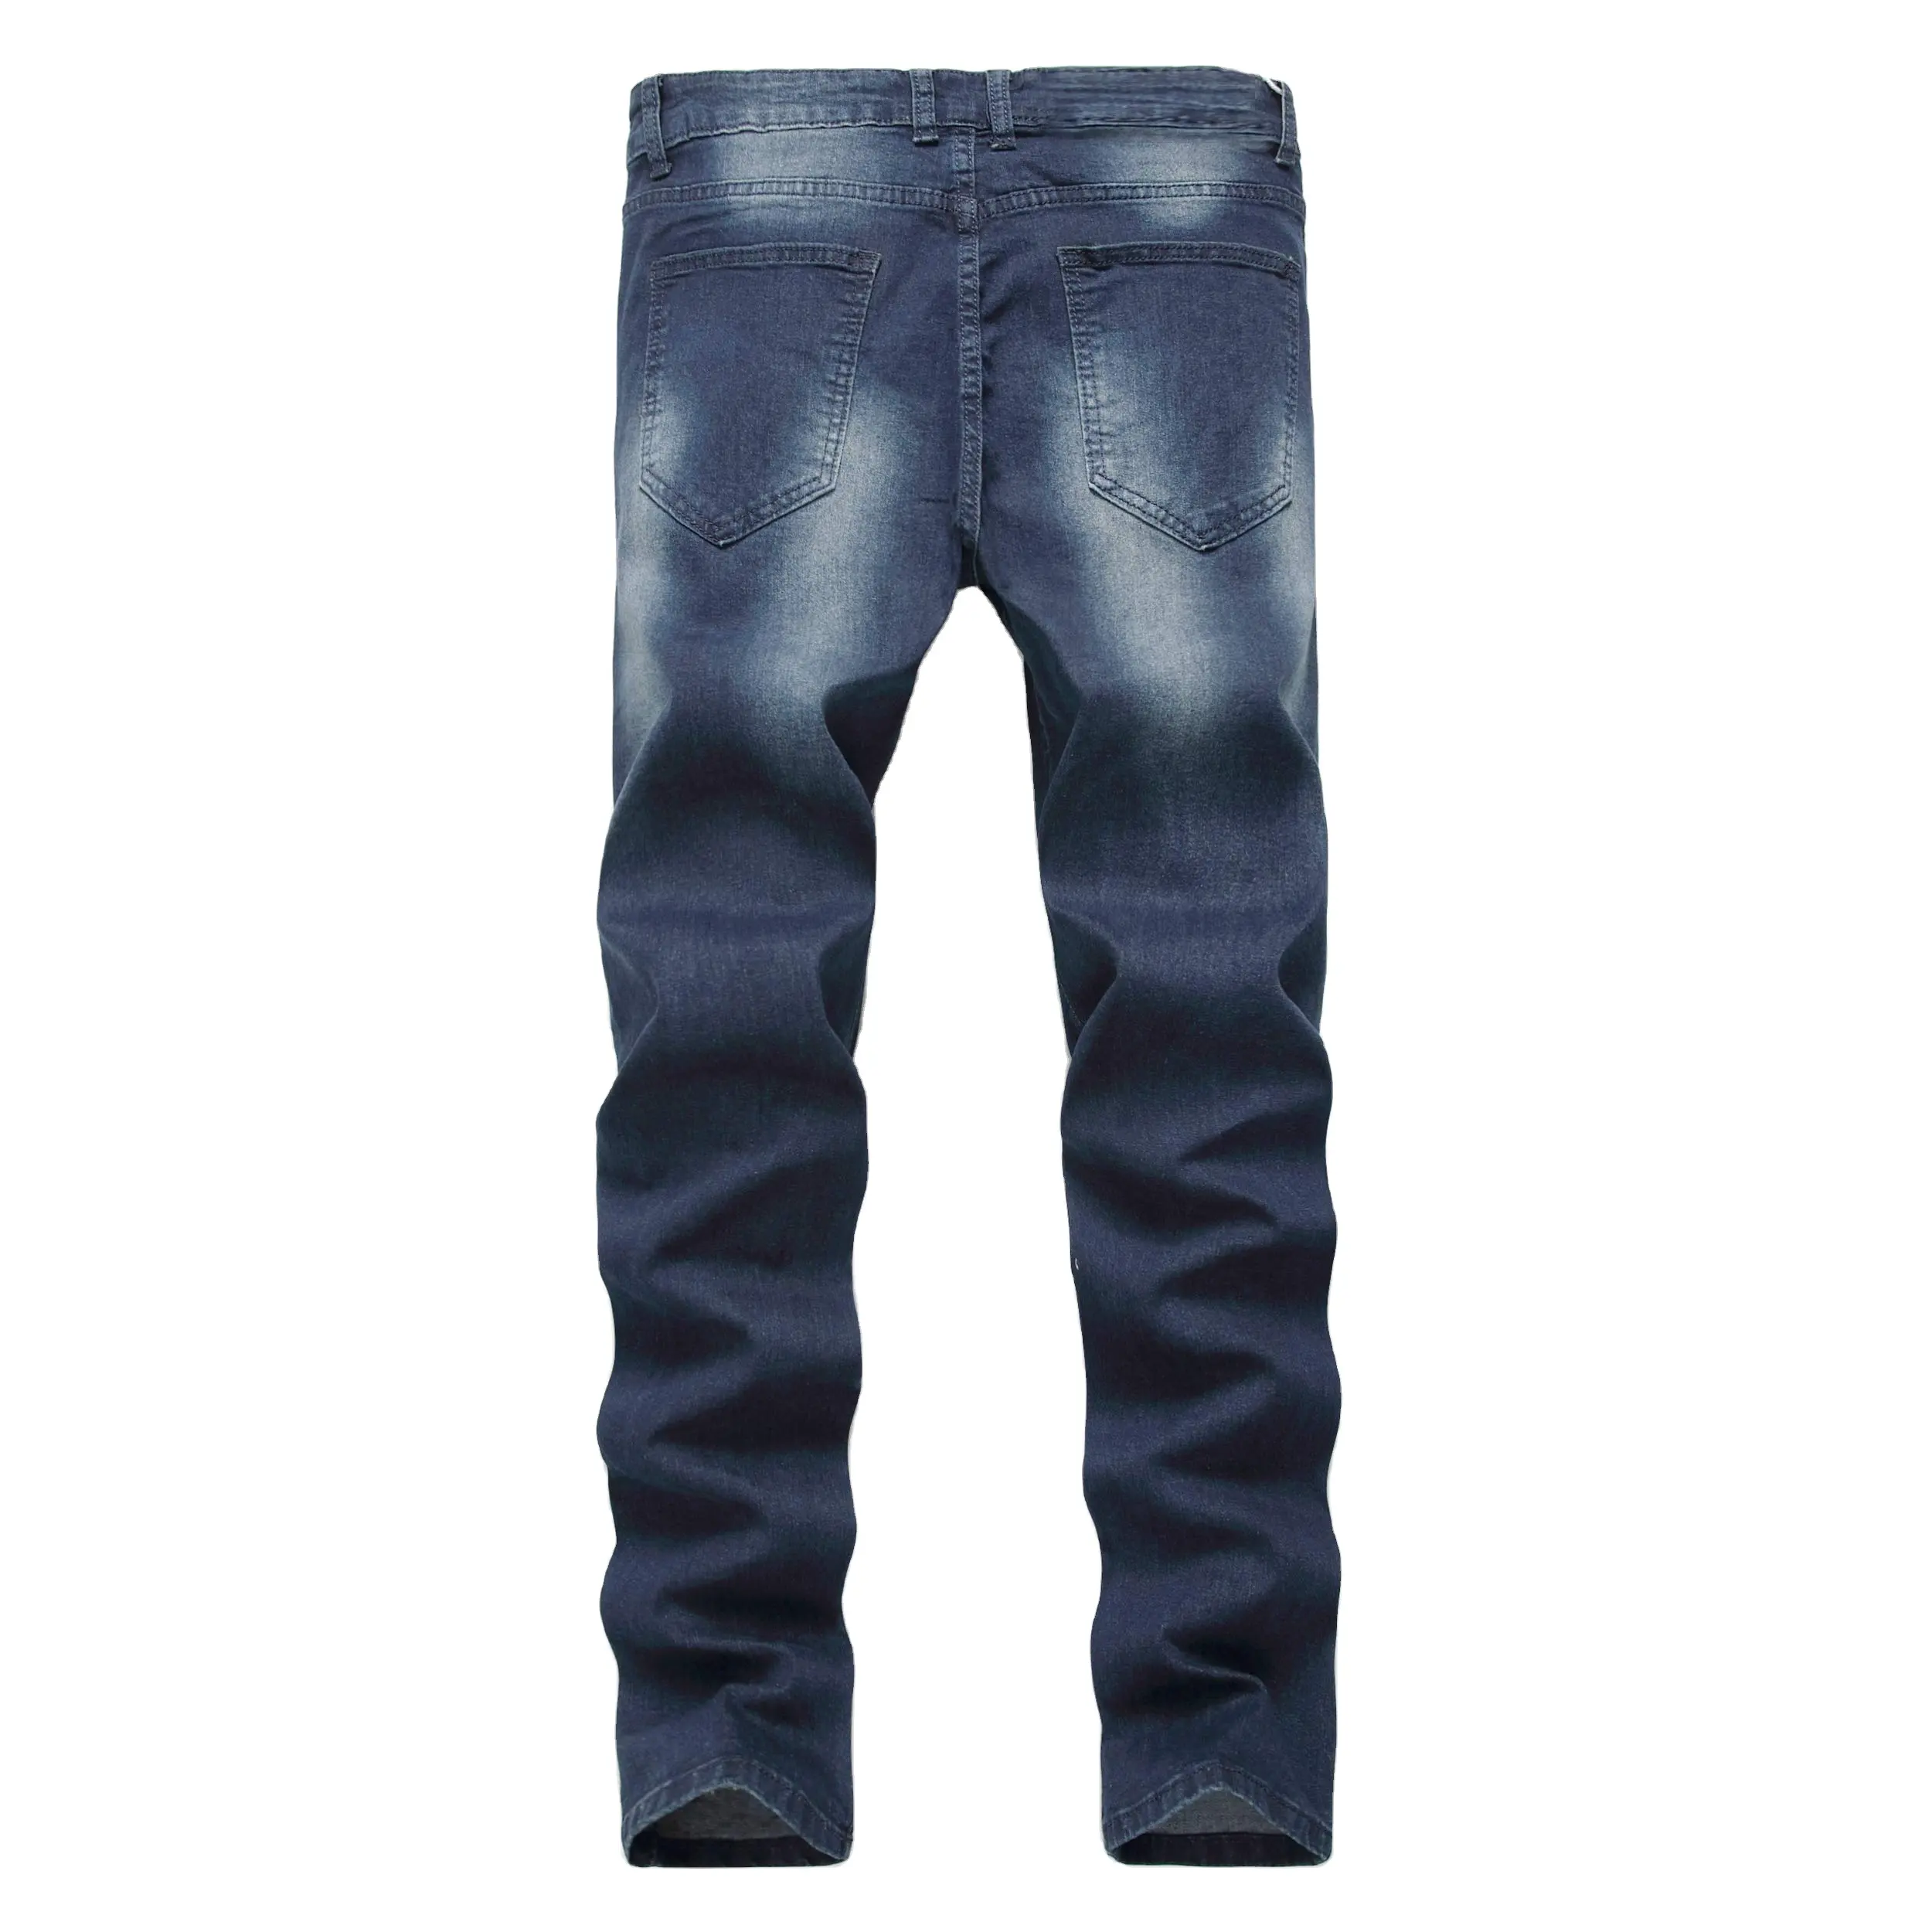 Pakistan Made Mans Jeans Pants Blue Color Denim Material Slim Fit Regular Jeans